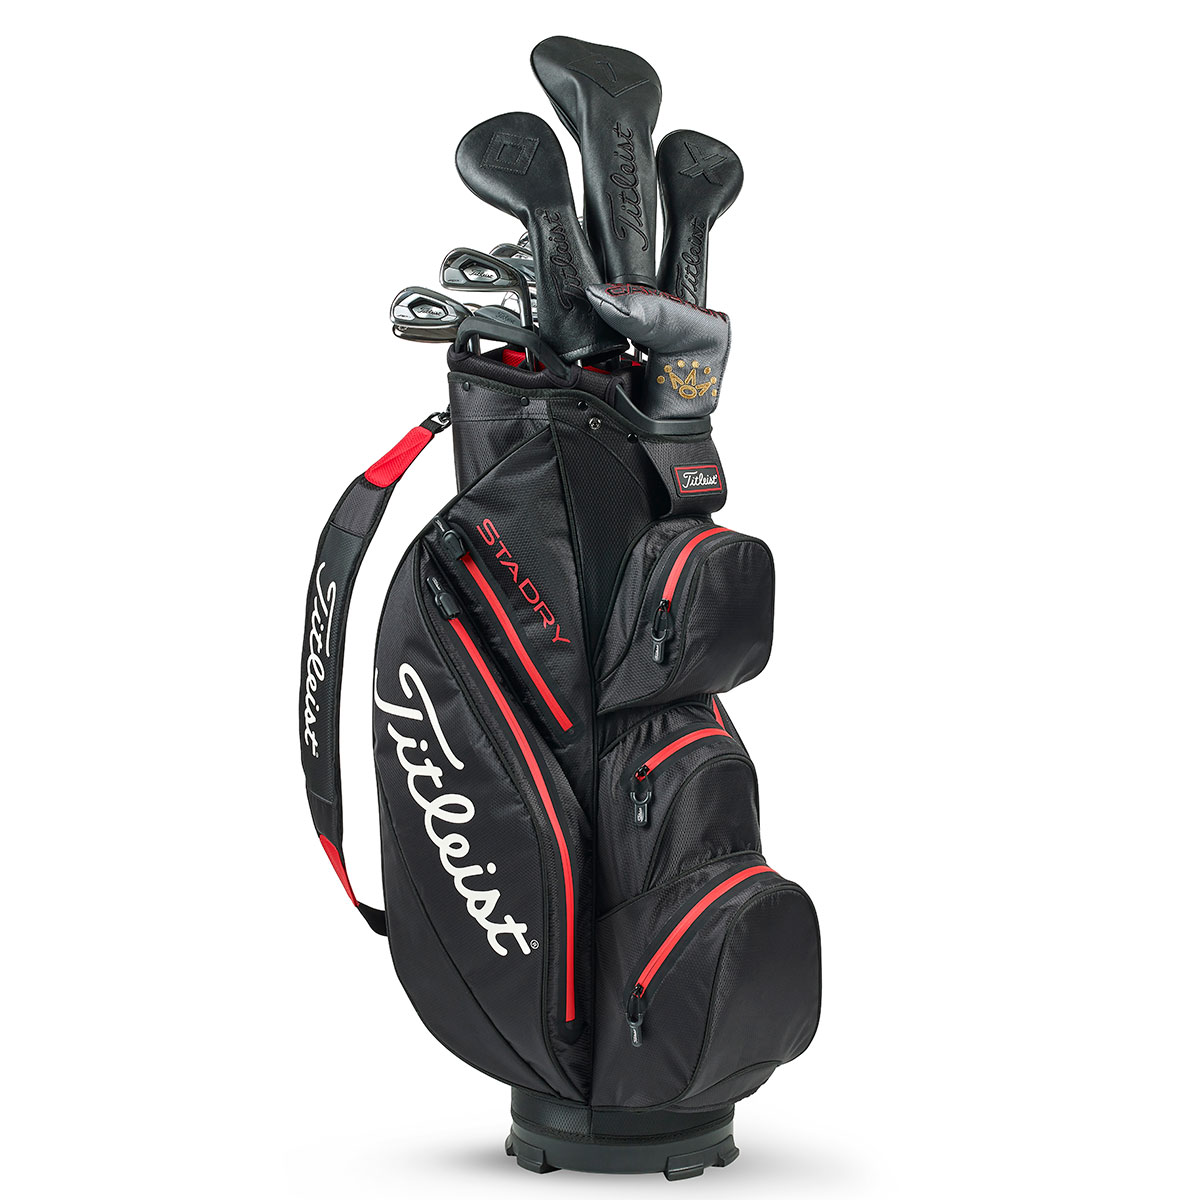 Titleist StaDry Cart Bag from american golf